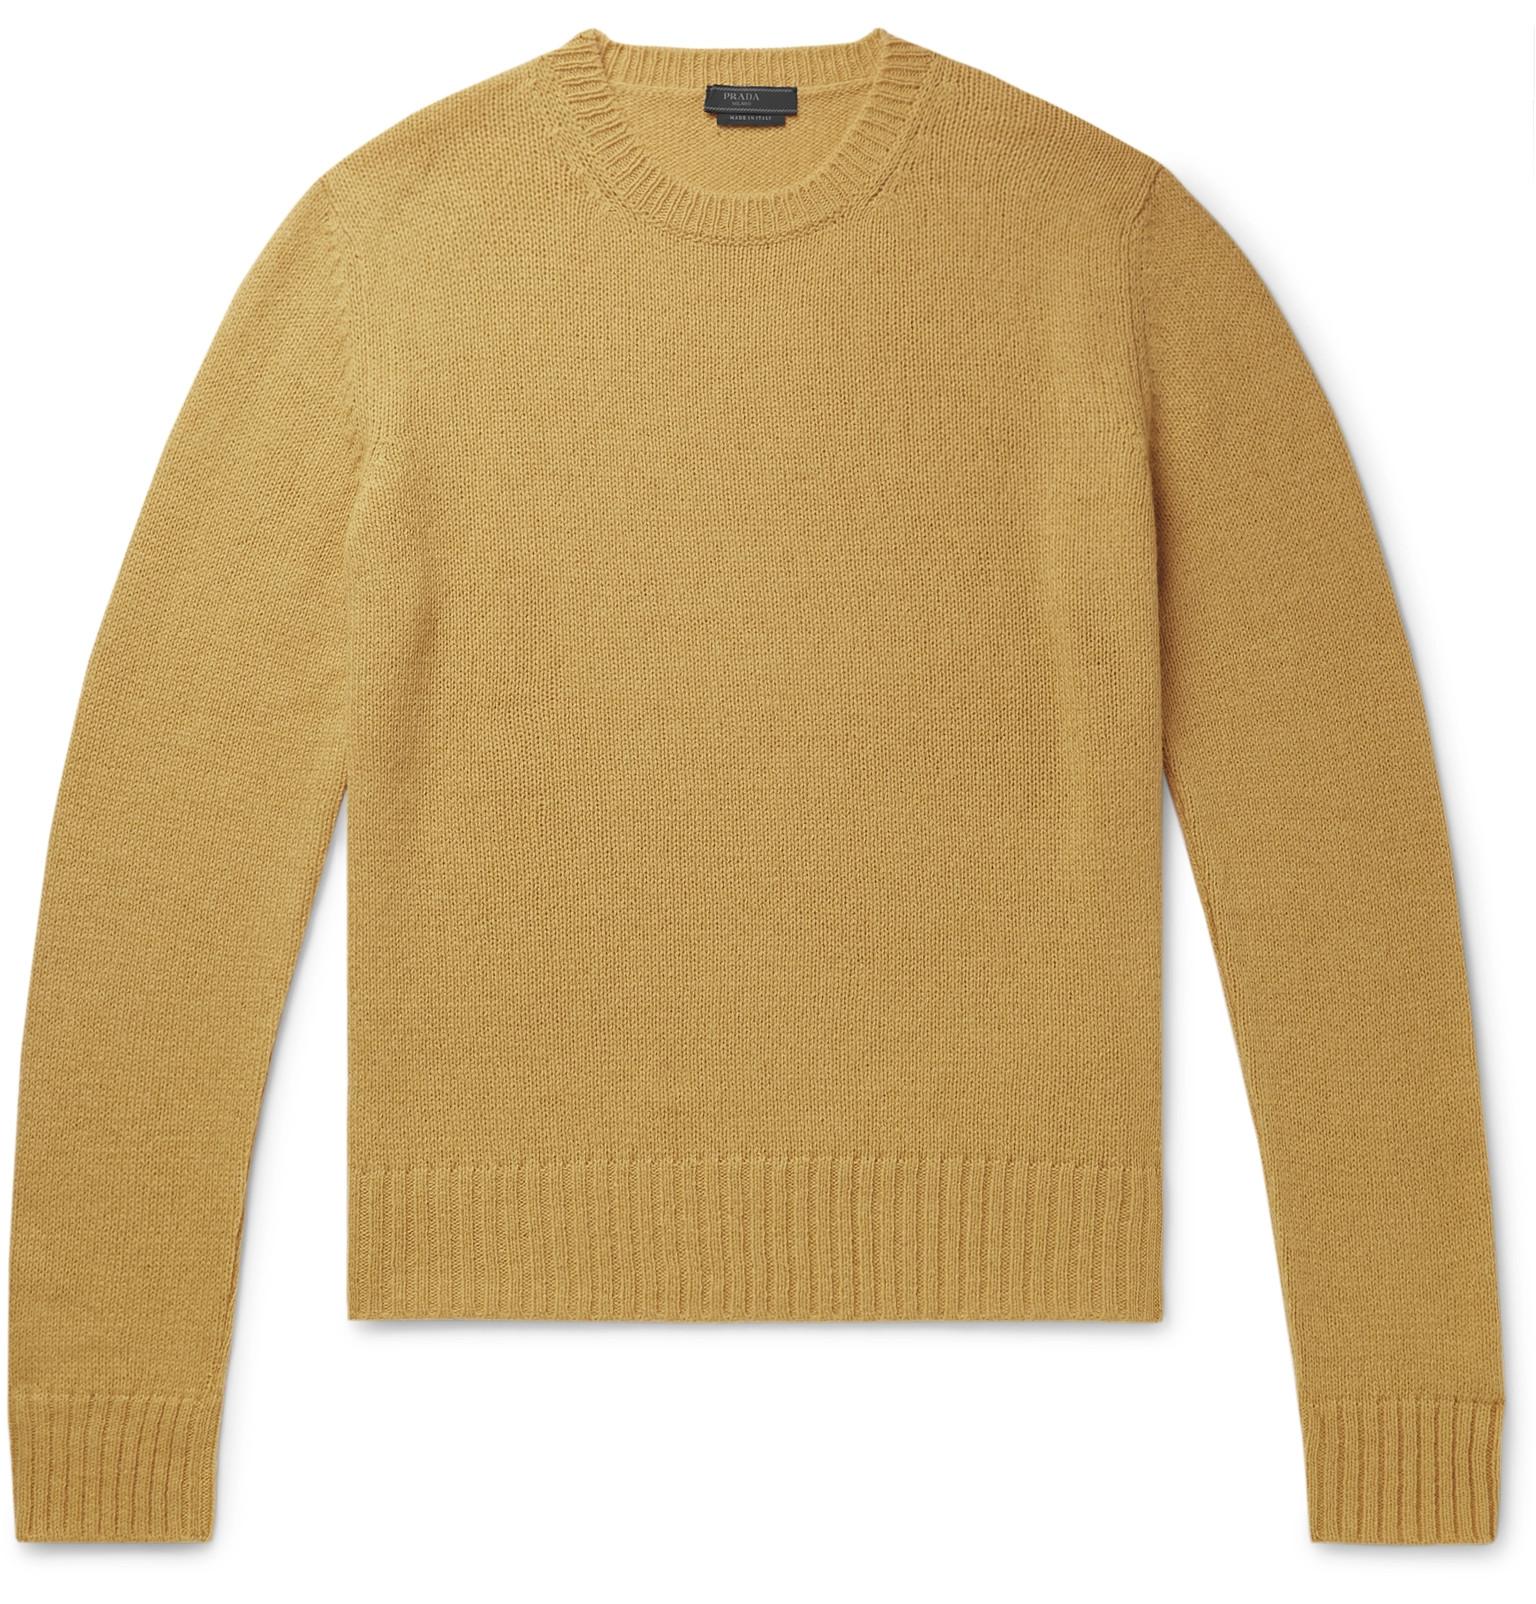 Prada Shetland Wool Sweater in Yellow for Men - Lyst